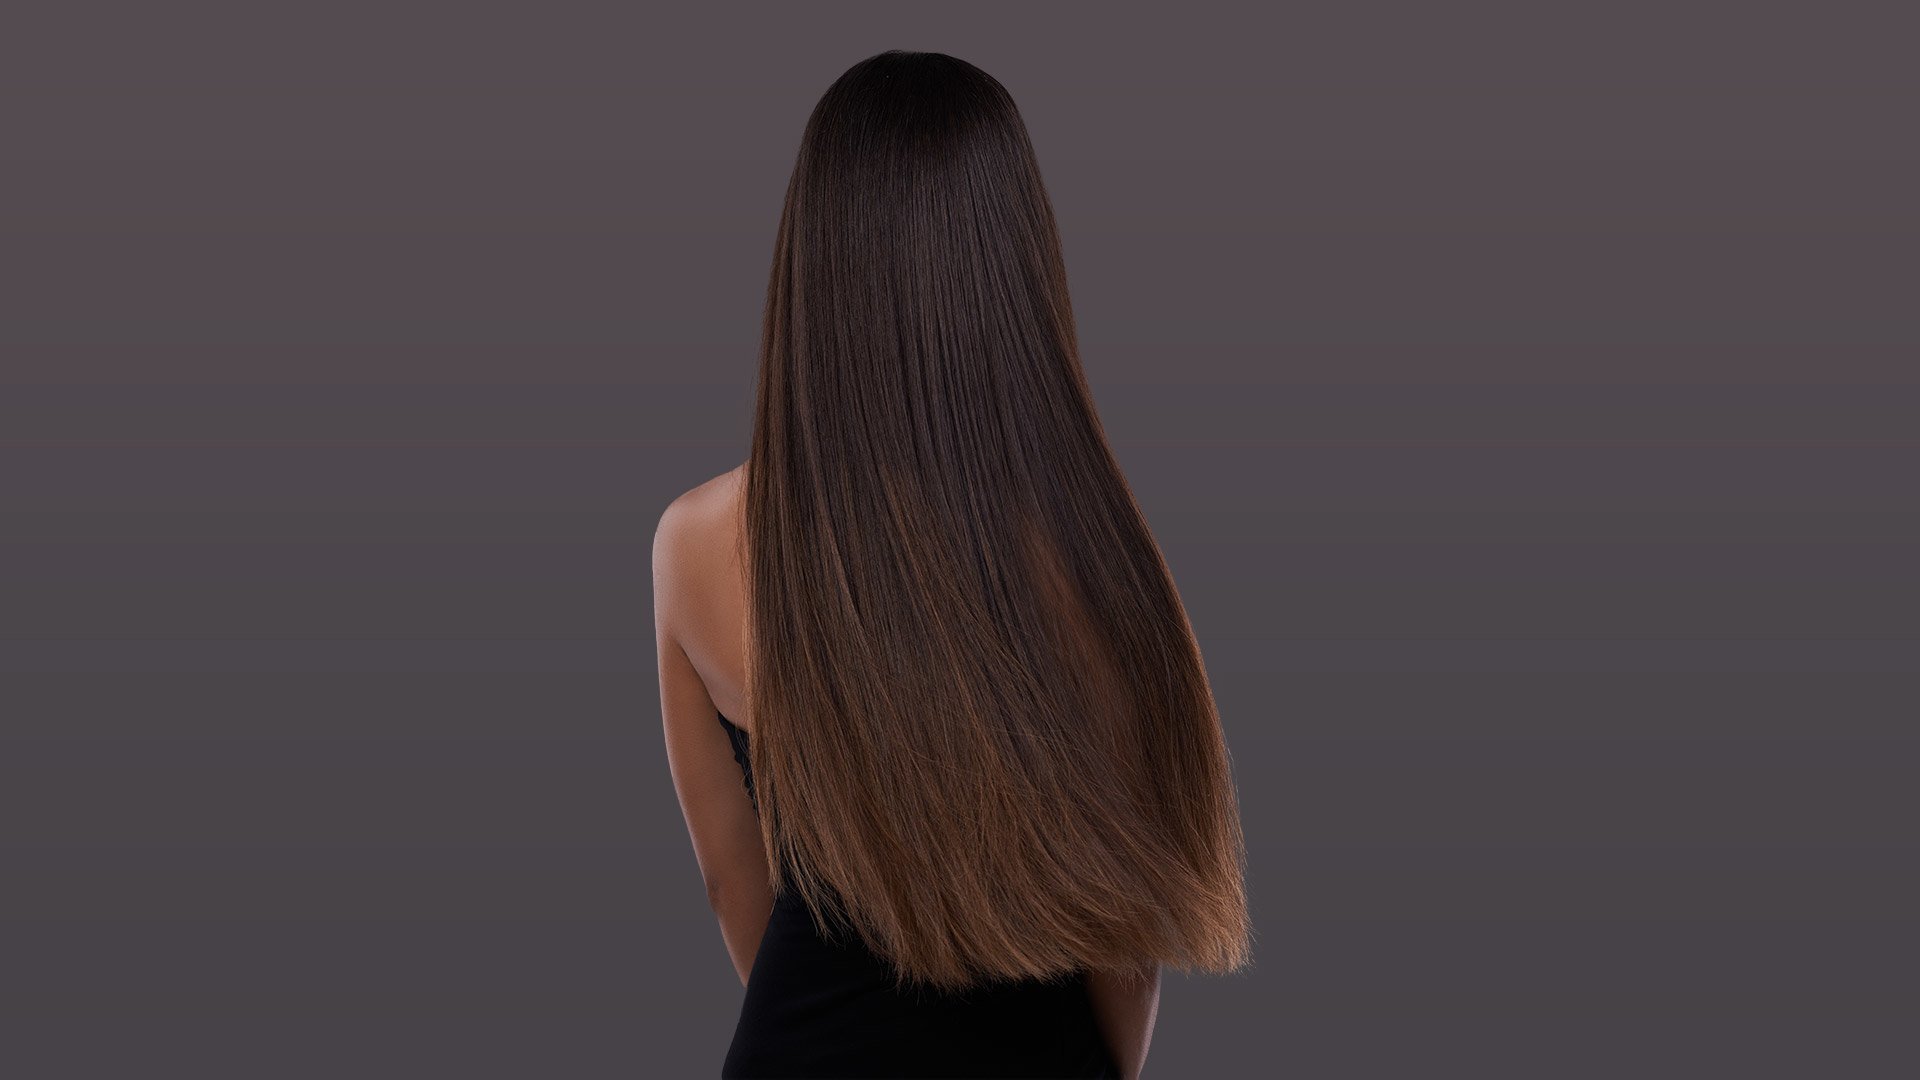 https://www.lorealparisusa.com/-/media/project/loreal/brand-sites/oap/americas/us/beauty-magazine/articles-2/waist-length-hair/loreal-paris-article-how-to-care-for-waist-length-hair-d.jpg